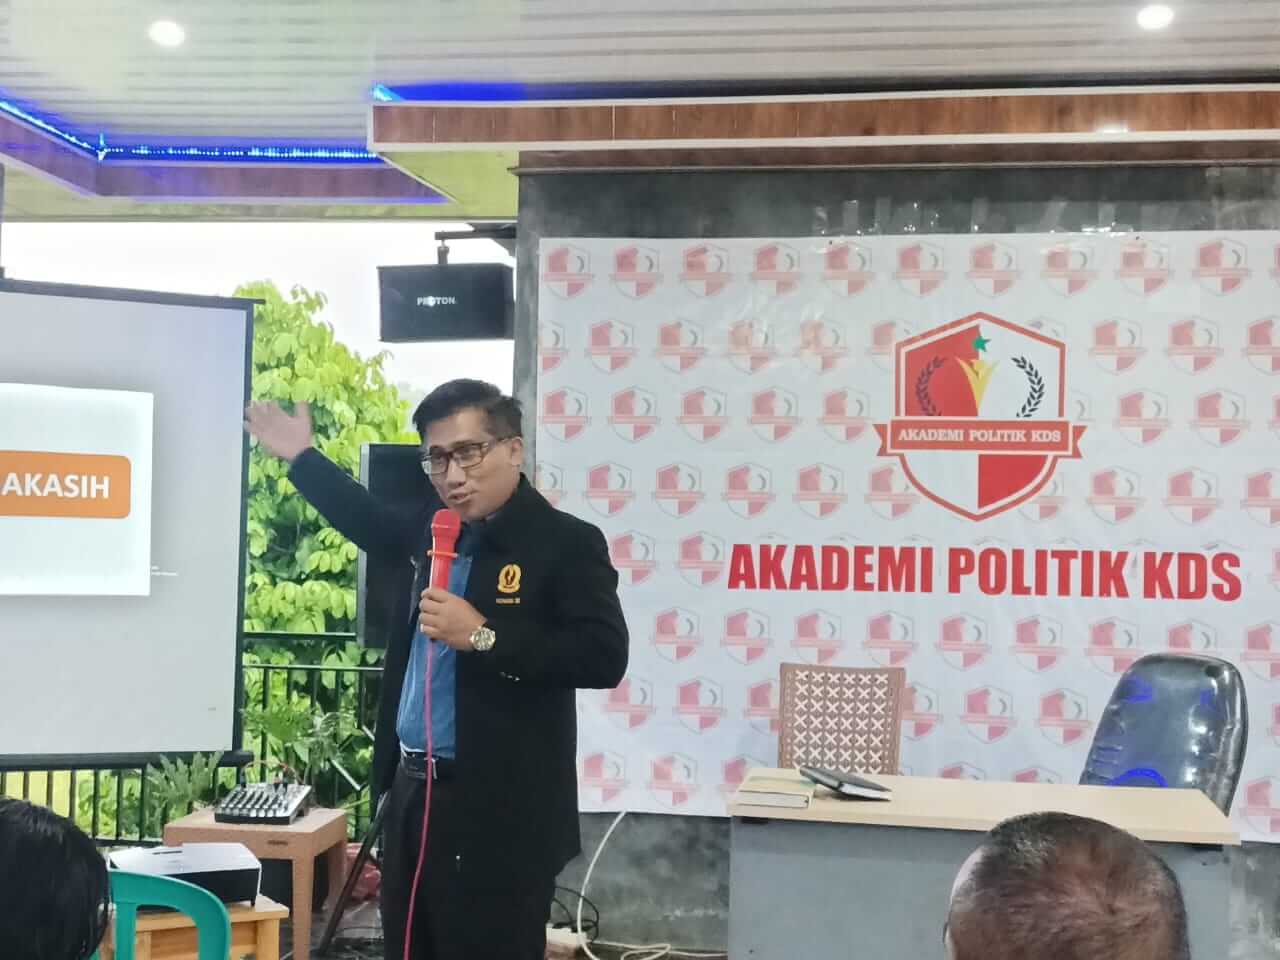 Akademi politik KDS